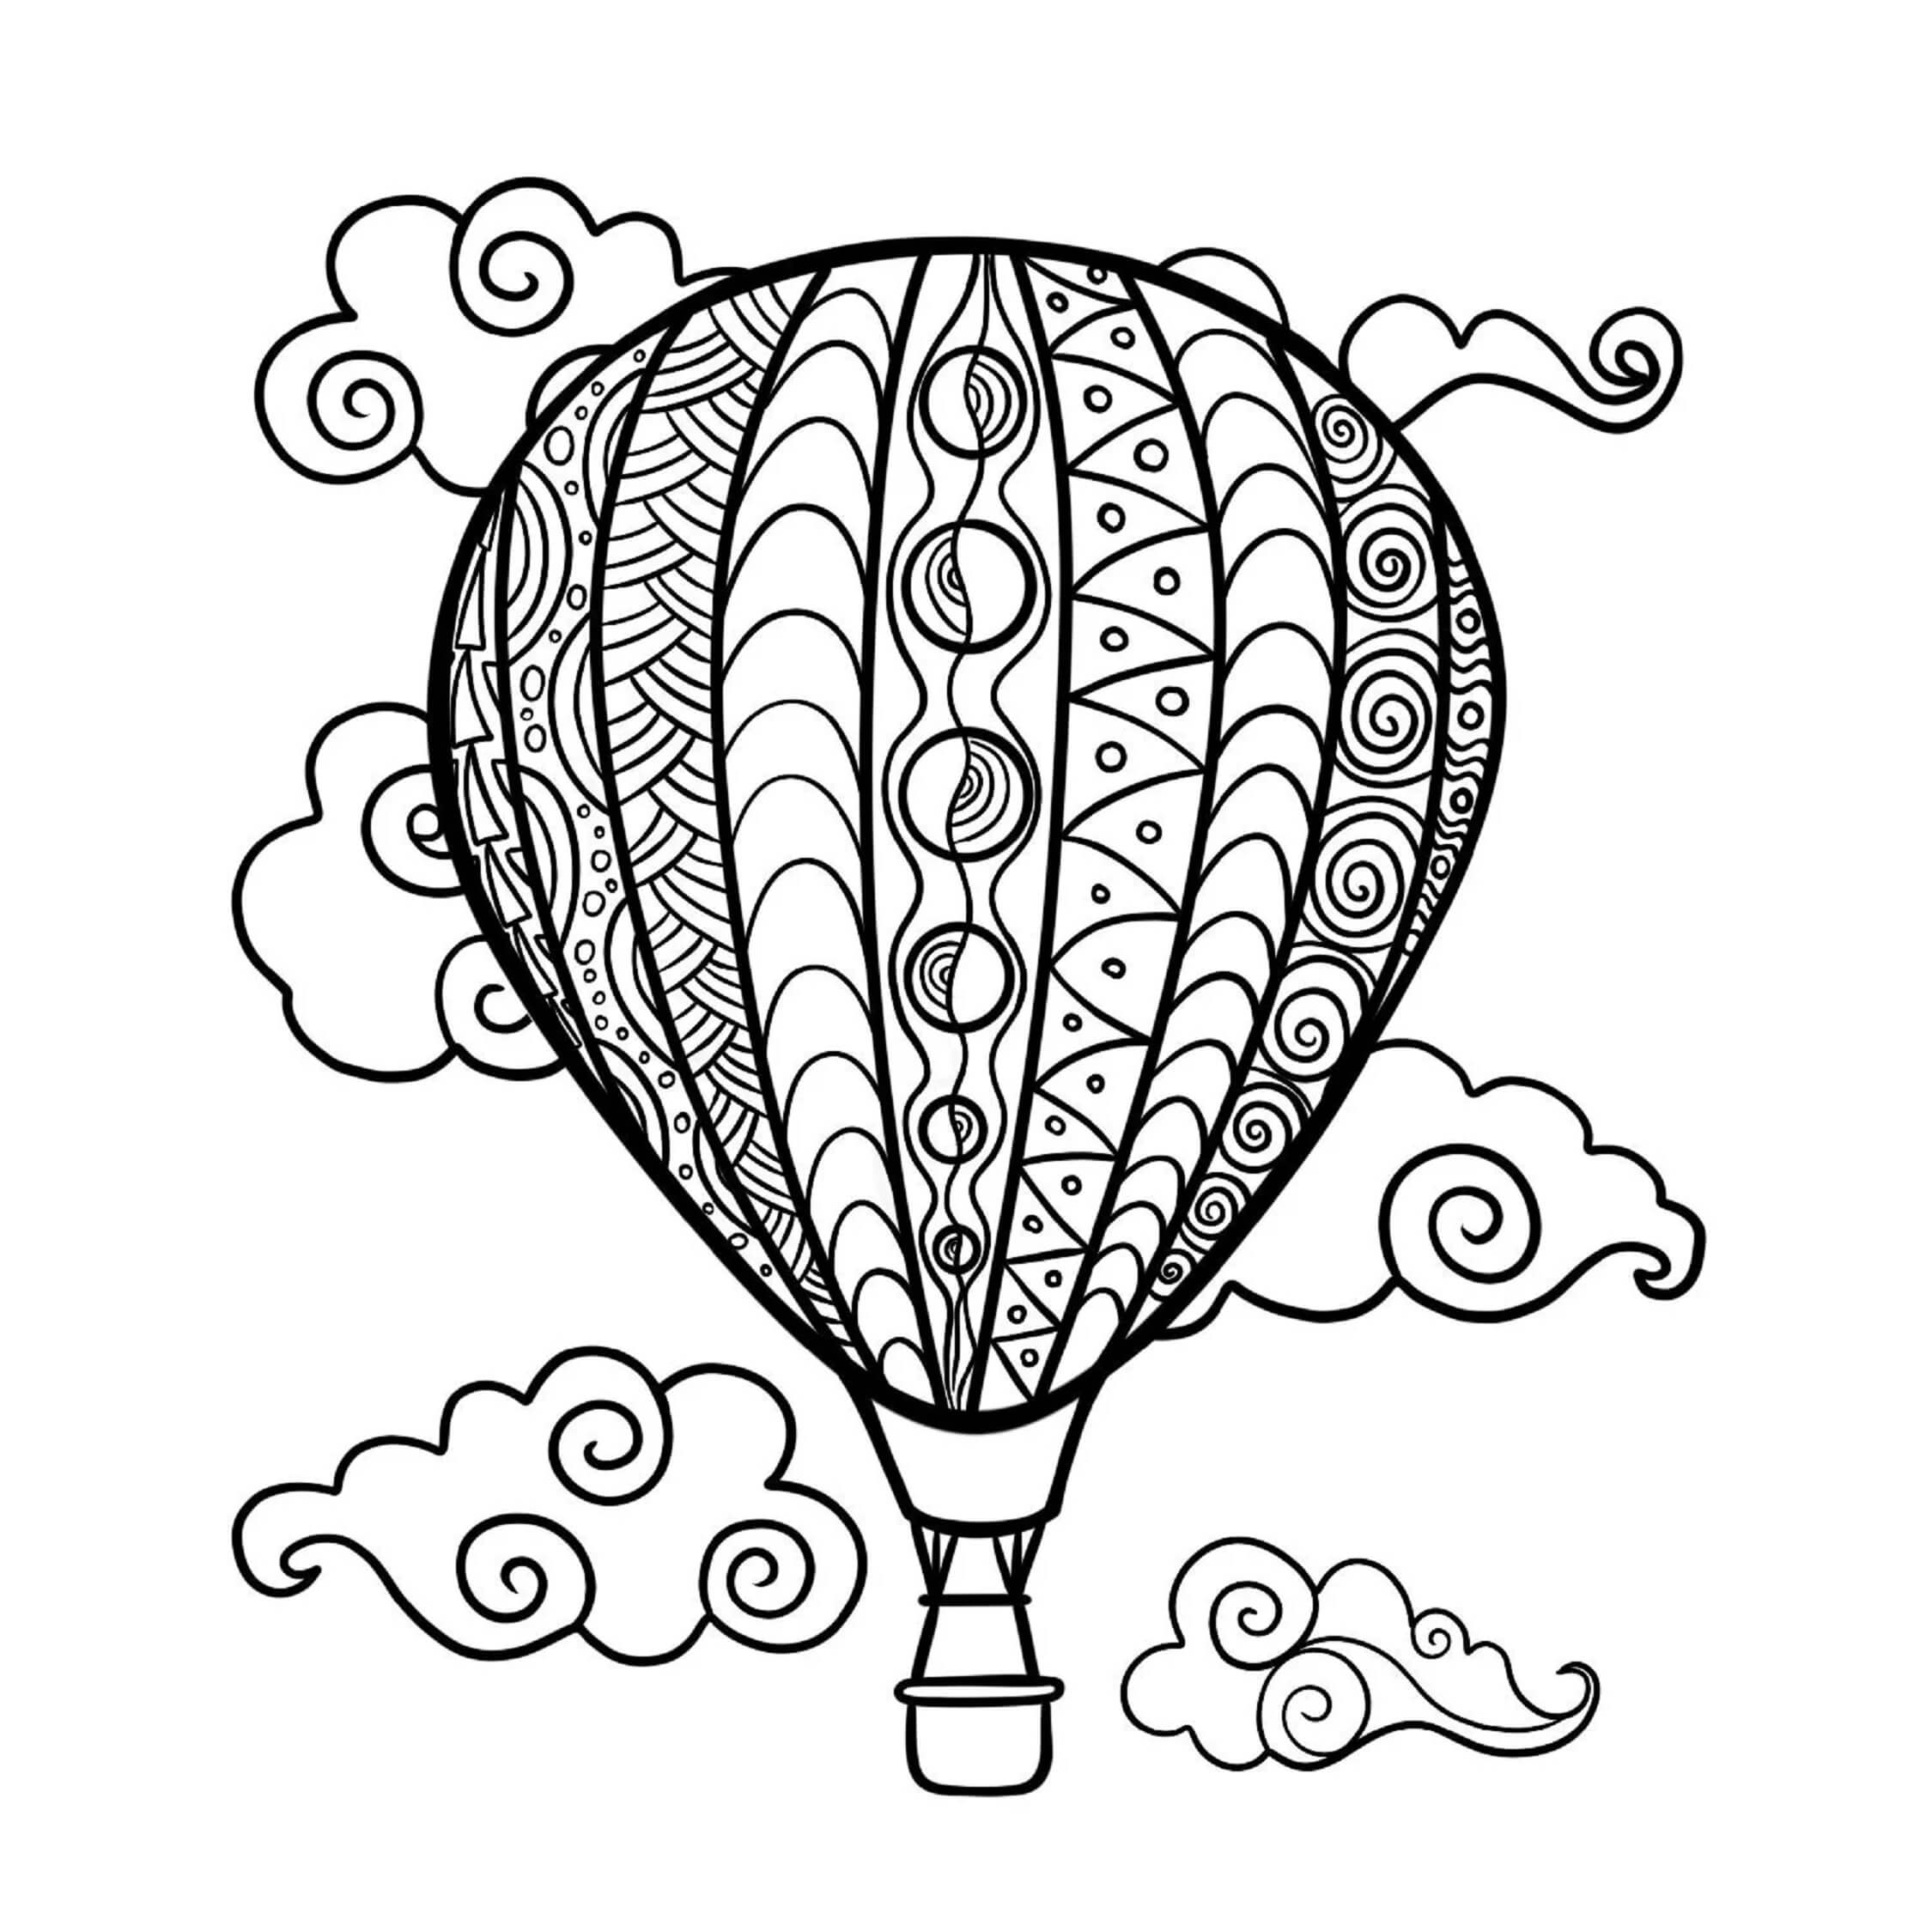 Varmluftsballon Mandala Med Skyer Tegninger til Farvelægning